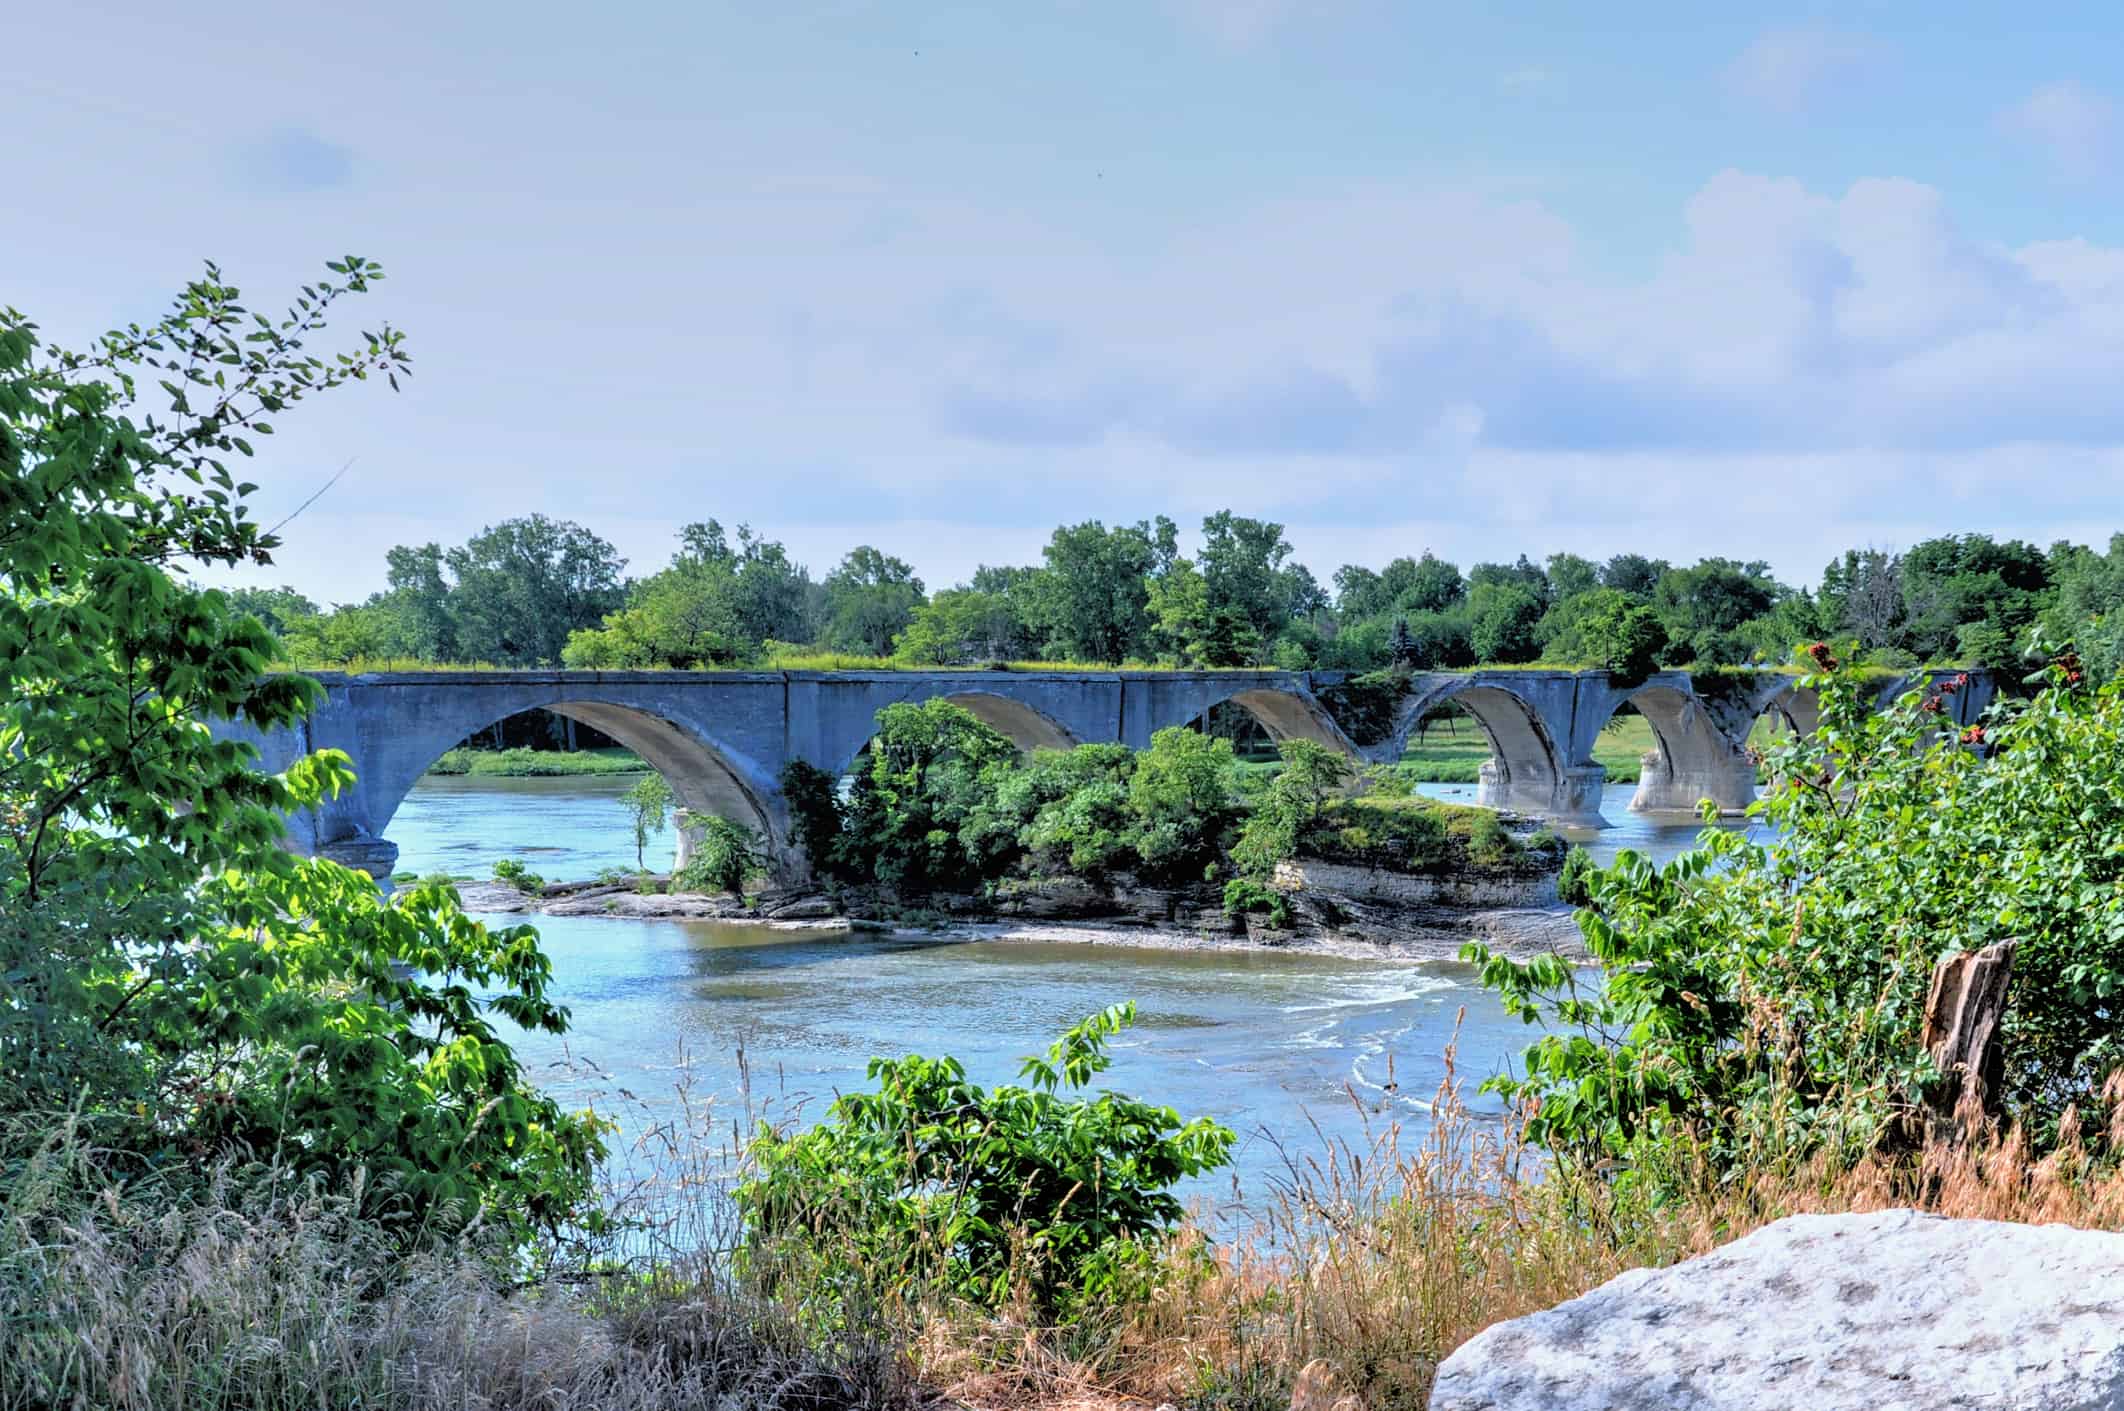 Interurban Stone Bridge over the Maumee River-Built in 1908 near Watertown, Ohio